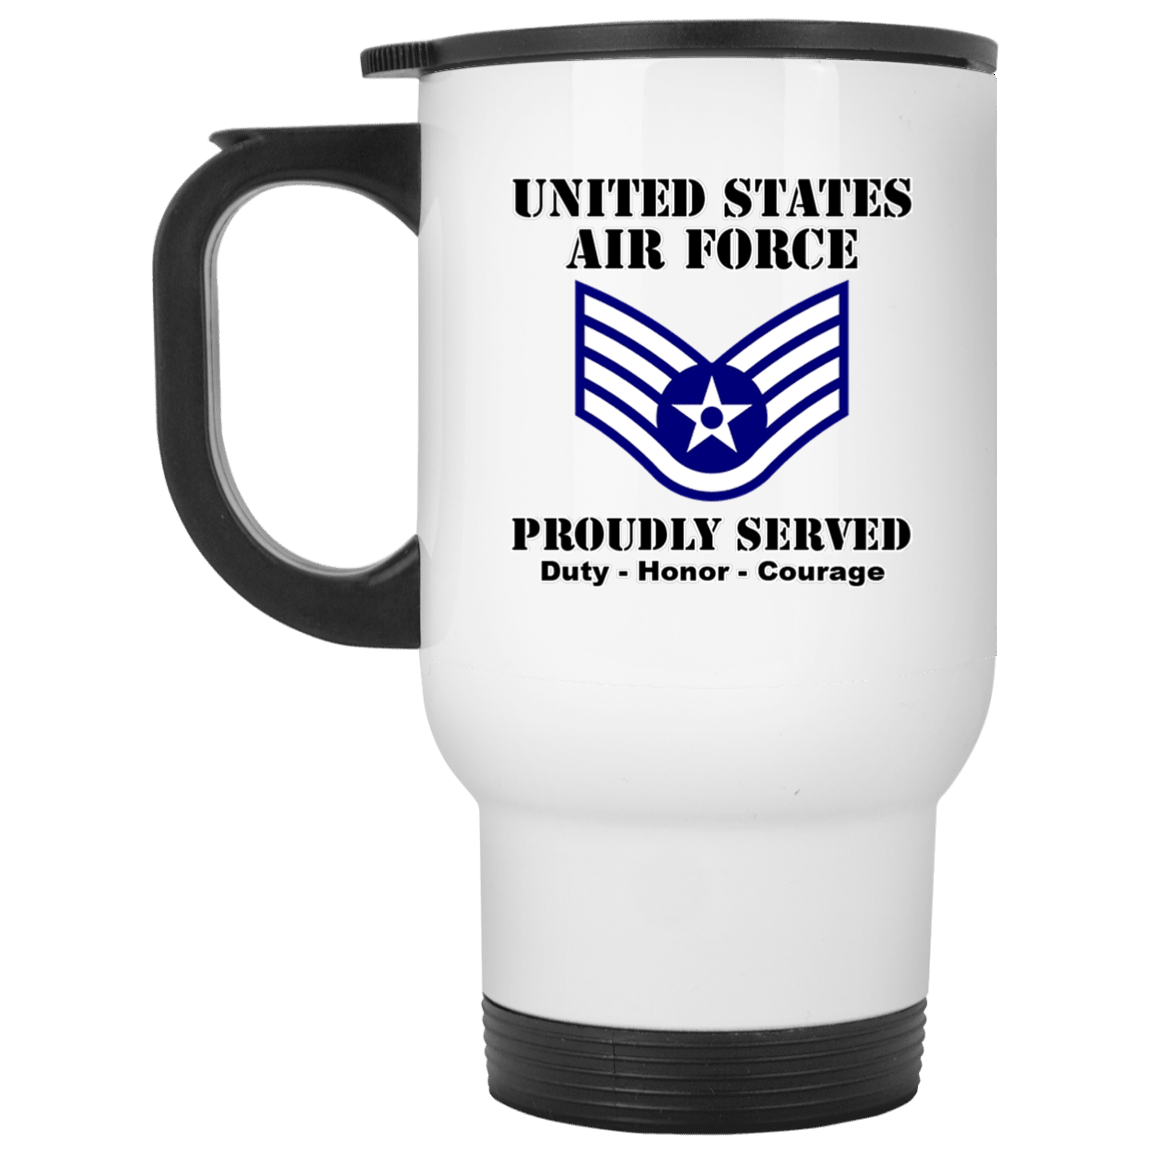 US Air Force E-5 Staff Sergeant SSgt E5 Noncommissioned Officer Ranks White Coffee Mug - Stainless Travel Mug-Mug-USAF-Ranks-Veterans Nation